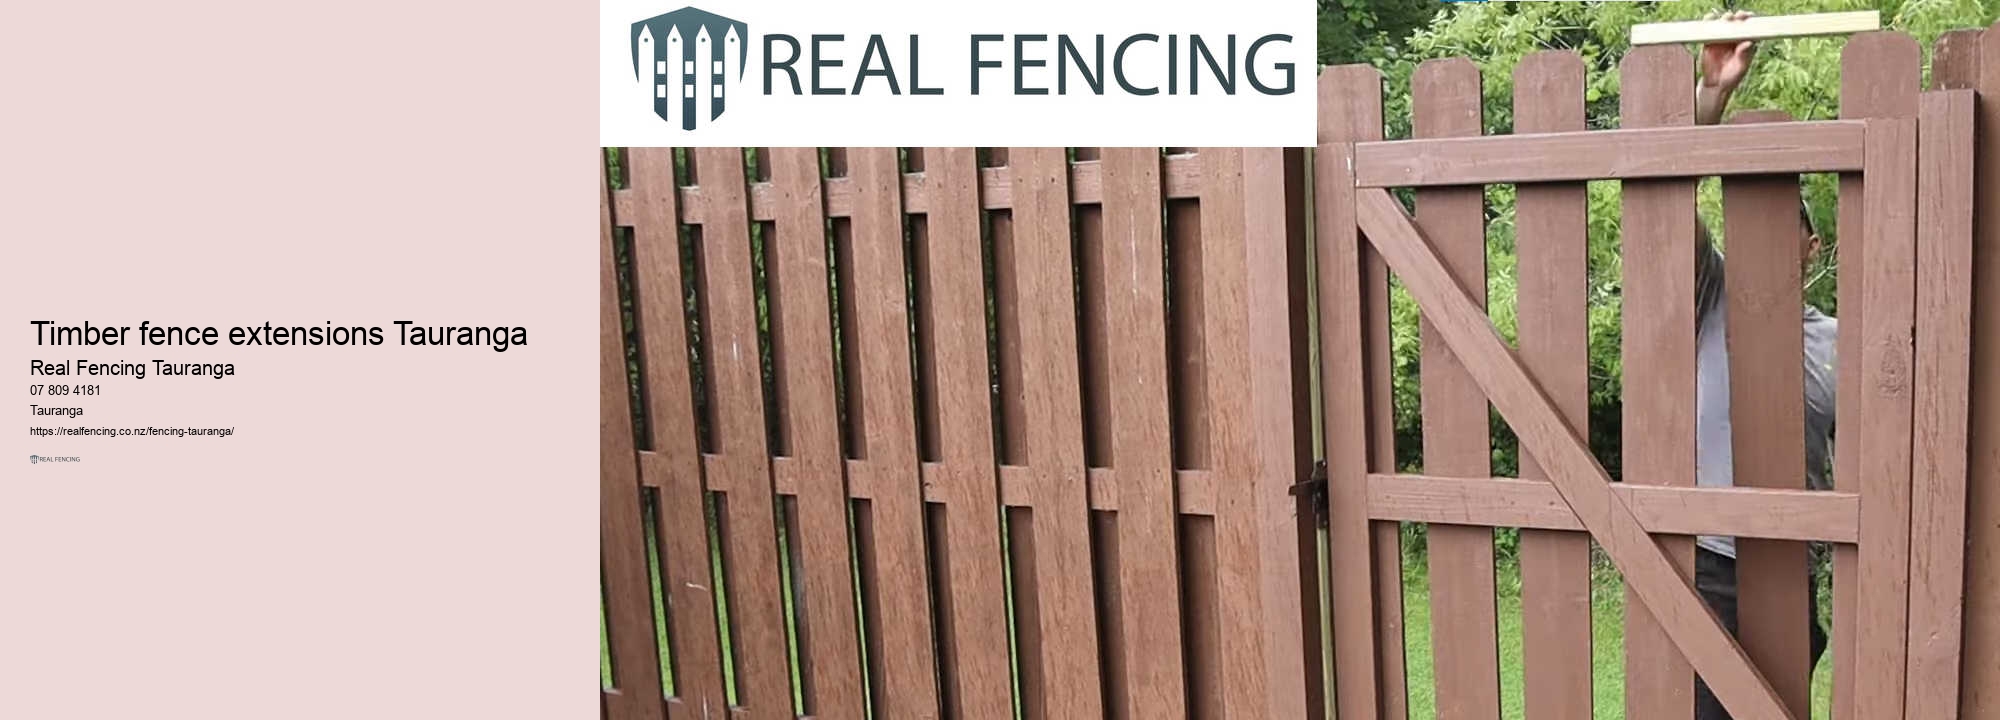 Fence repair company